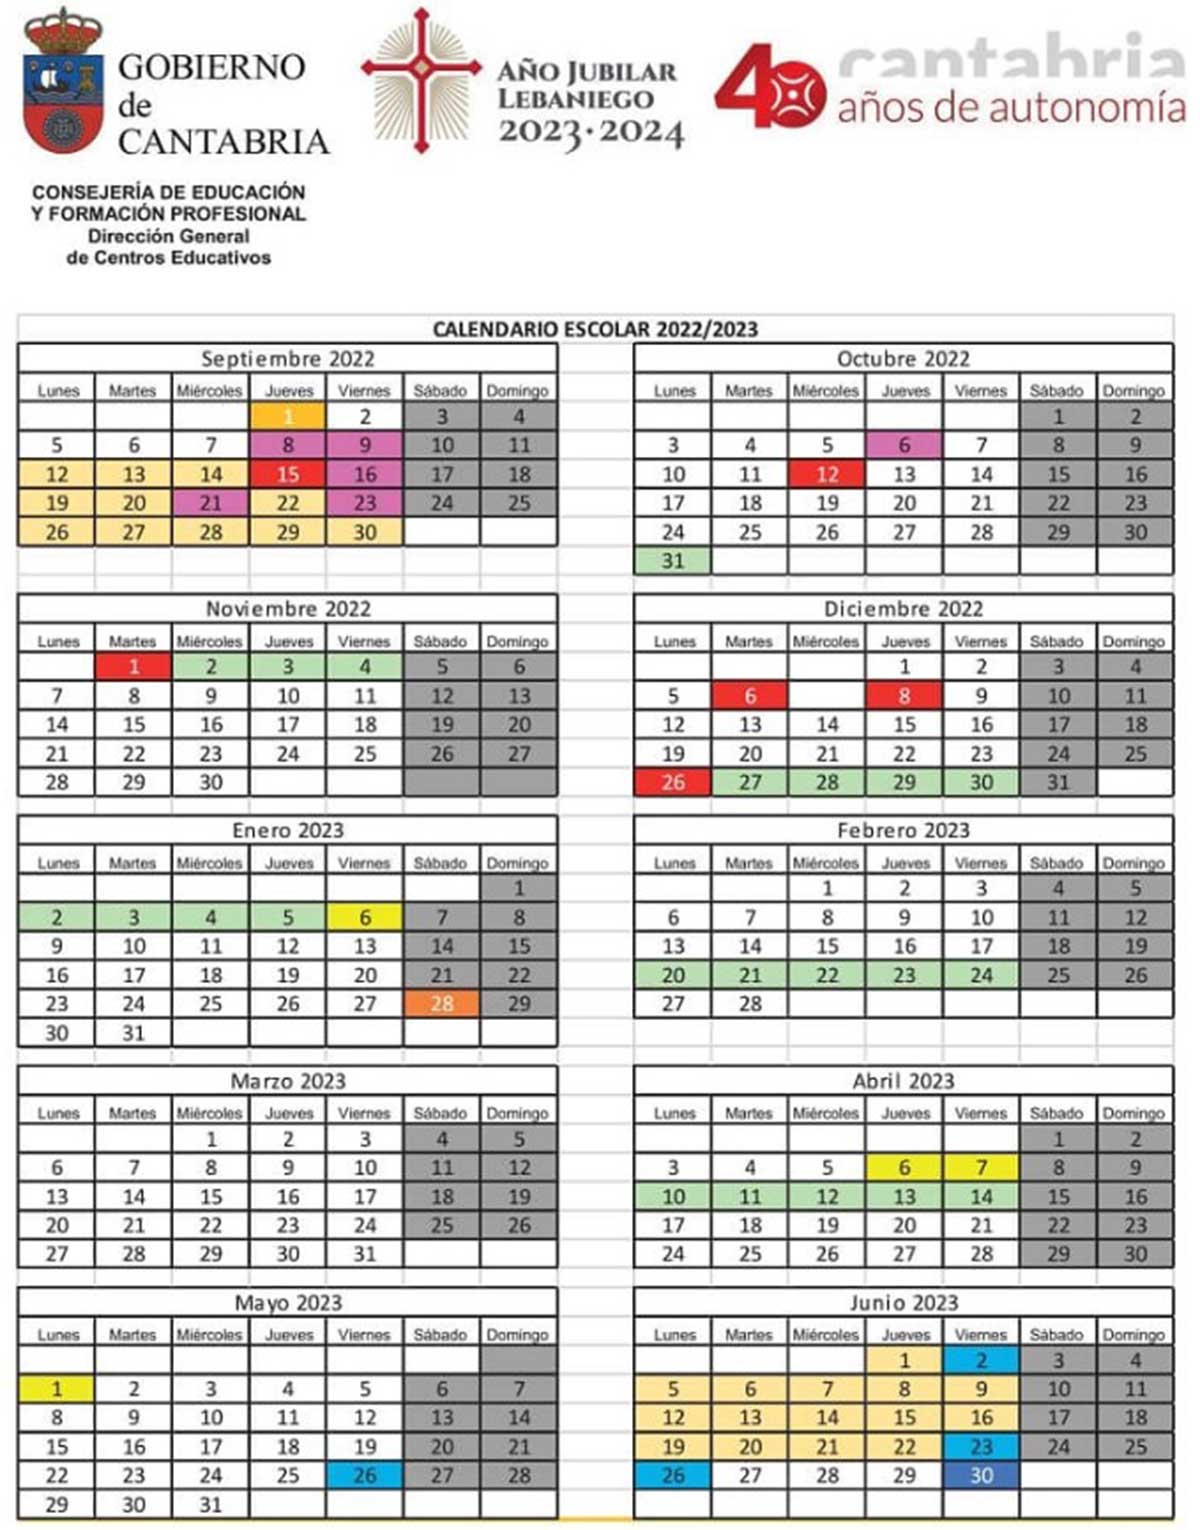 Calendario escolar de Cantabria para el curso 2022 / 2023.